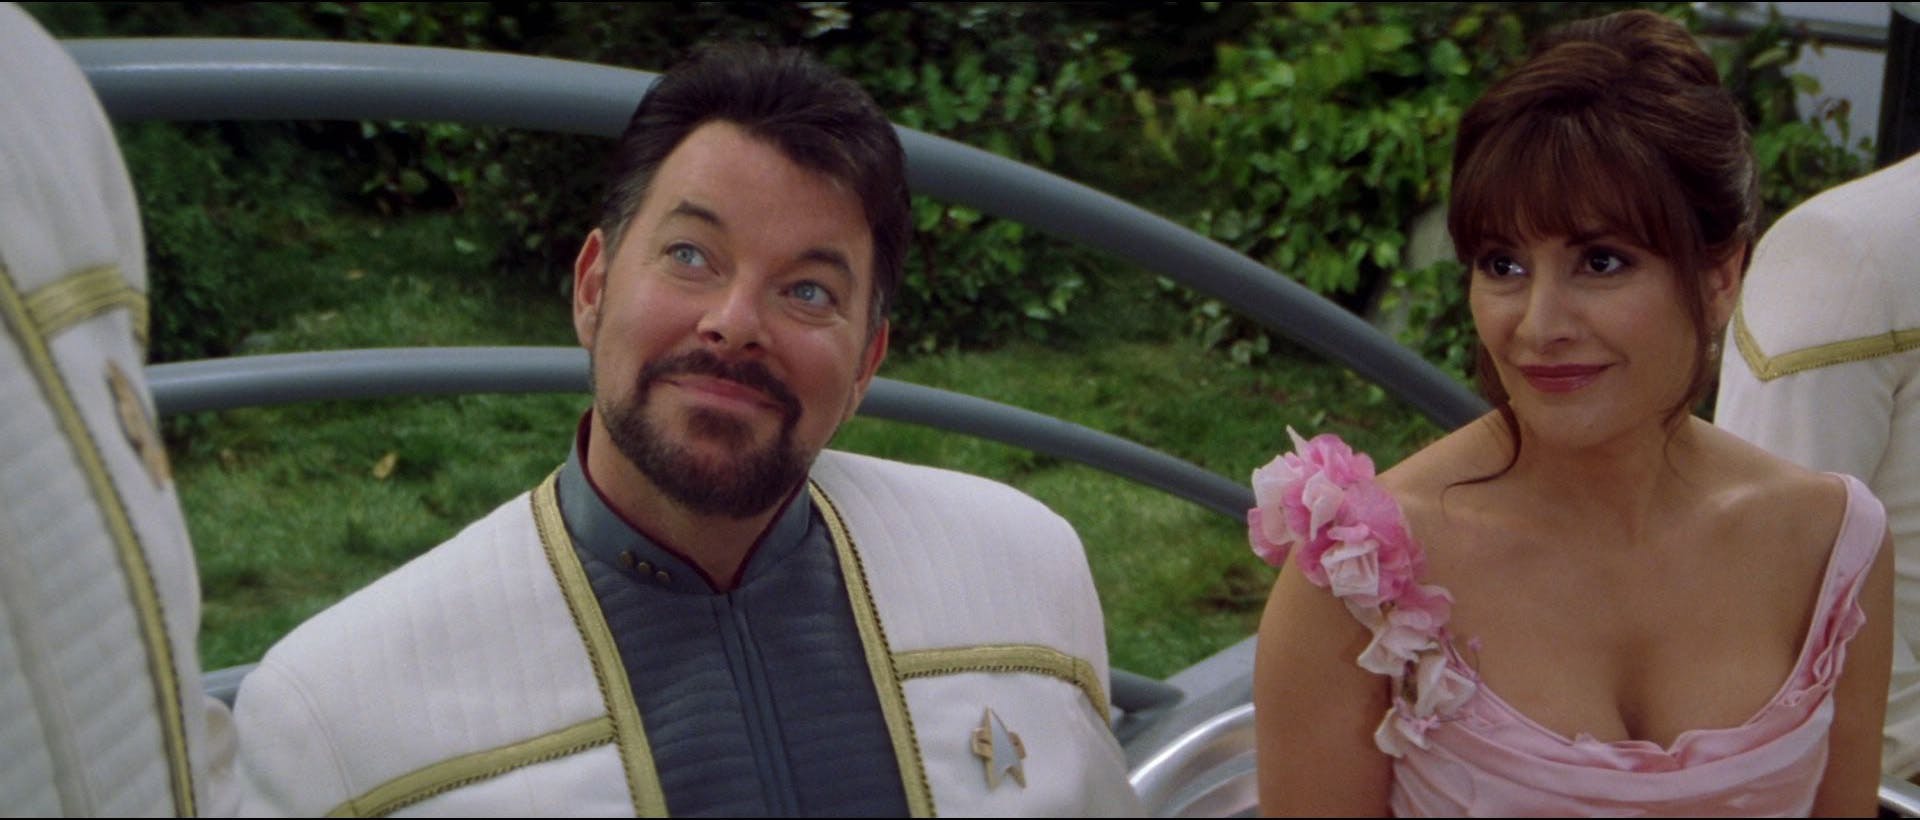 Newlyweds Will Riker and Deanna Troi at their wedding reception in Star Trek Nemesis